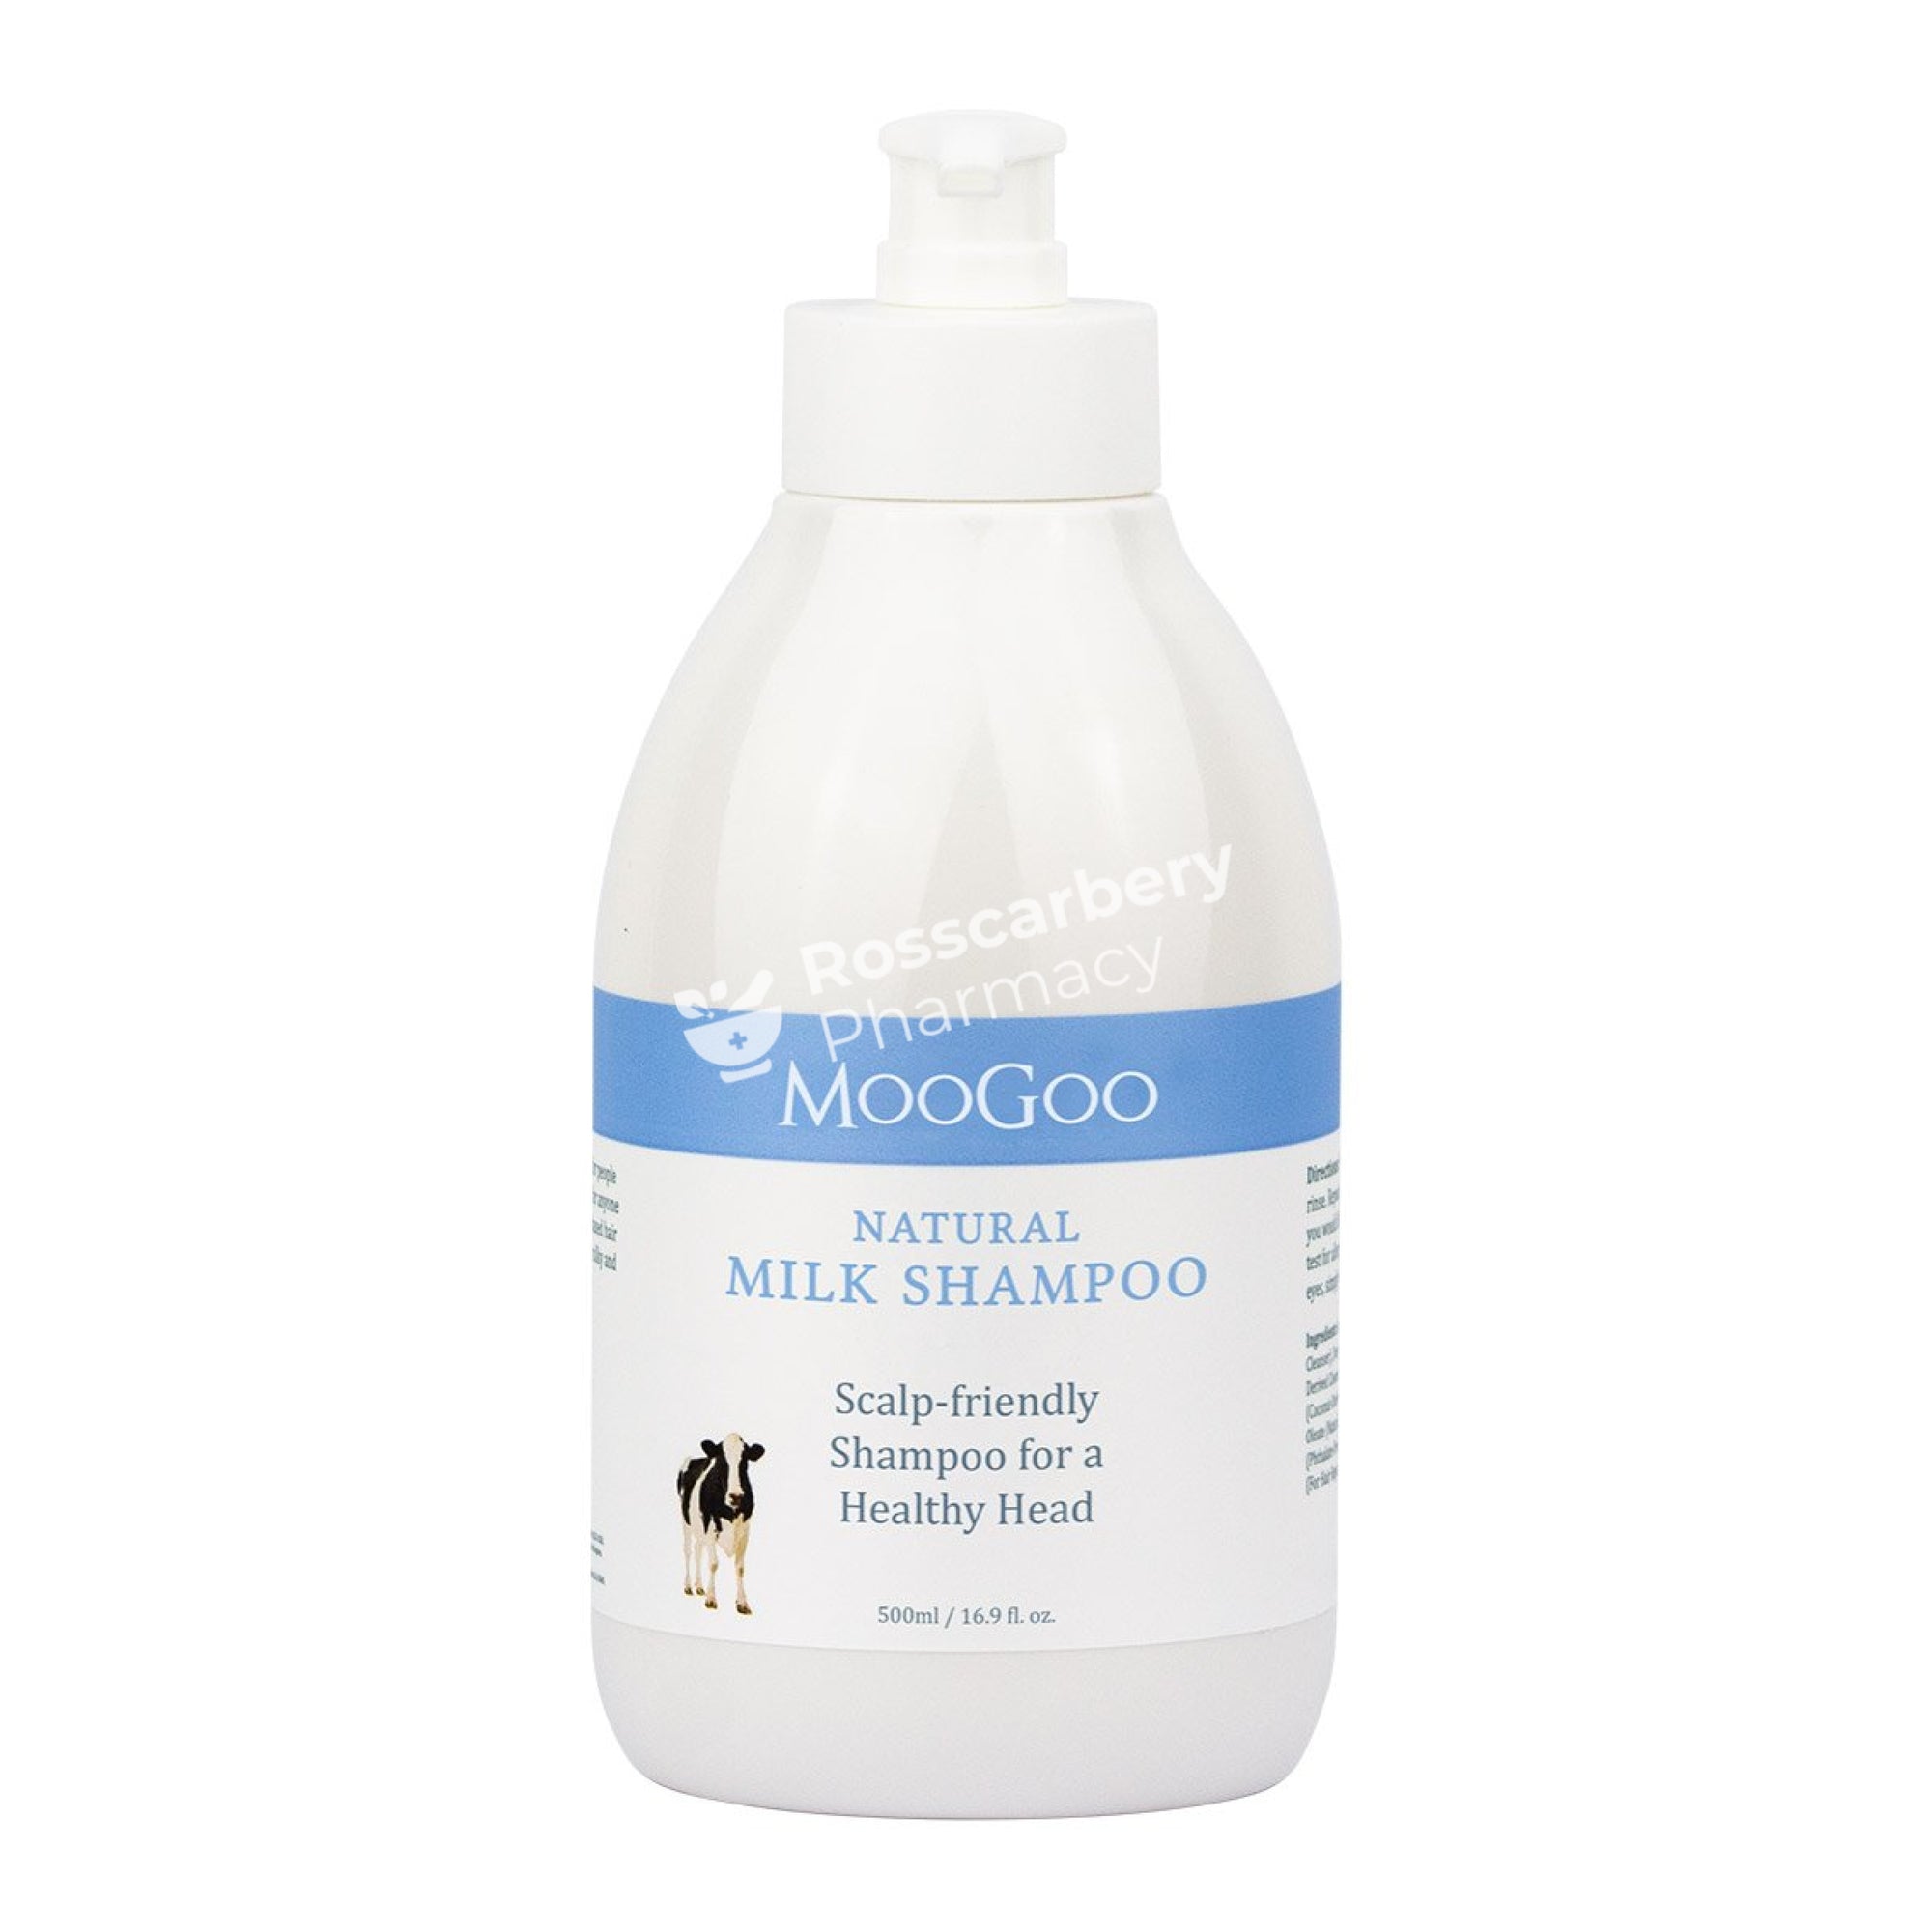 Moogoo Natural Milk Shampoo